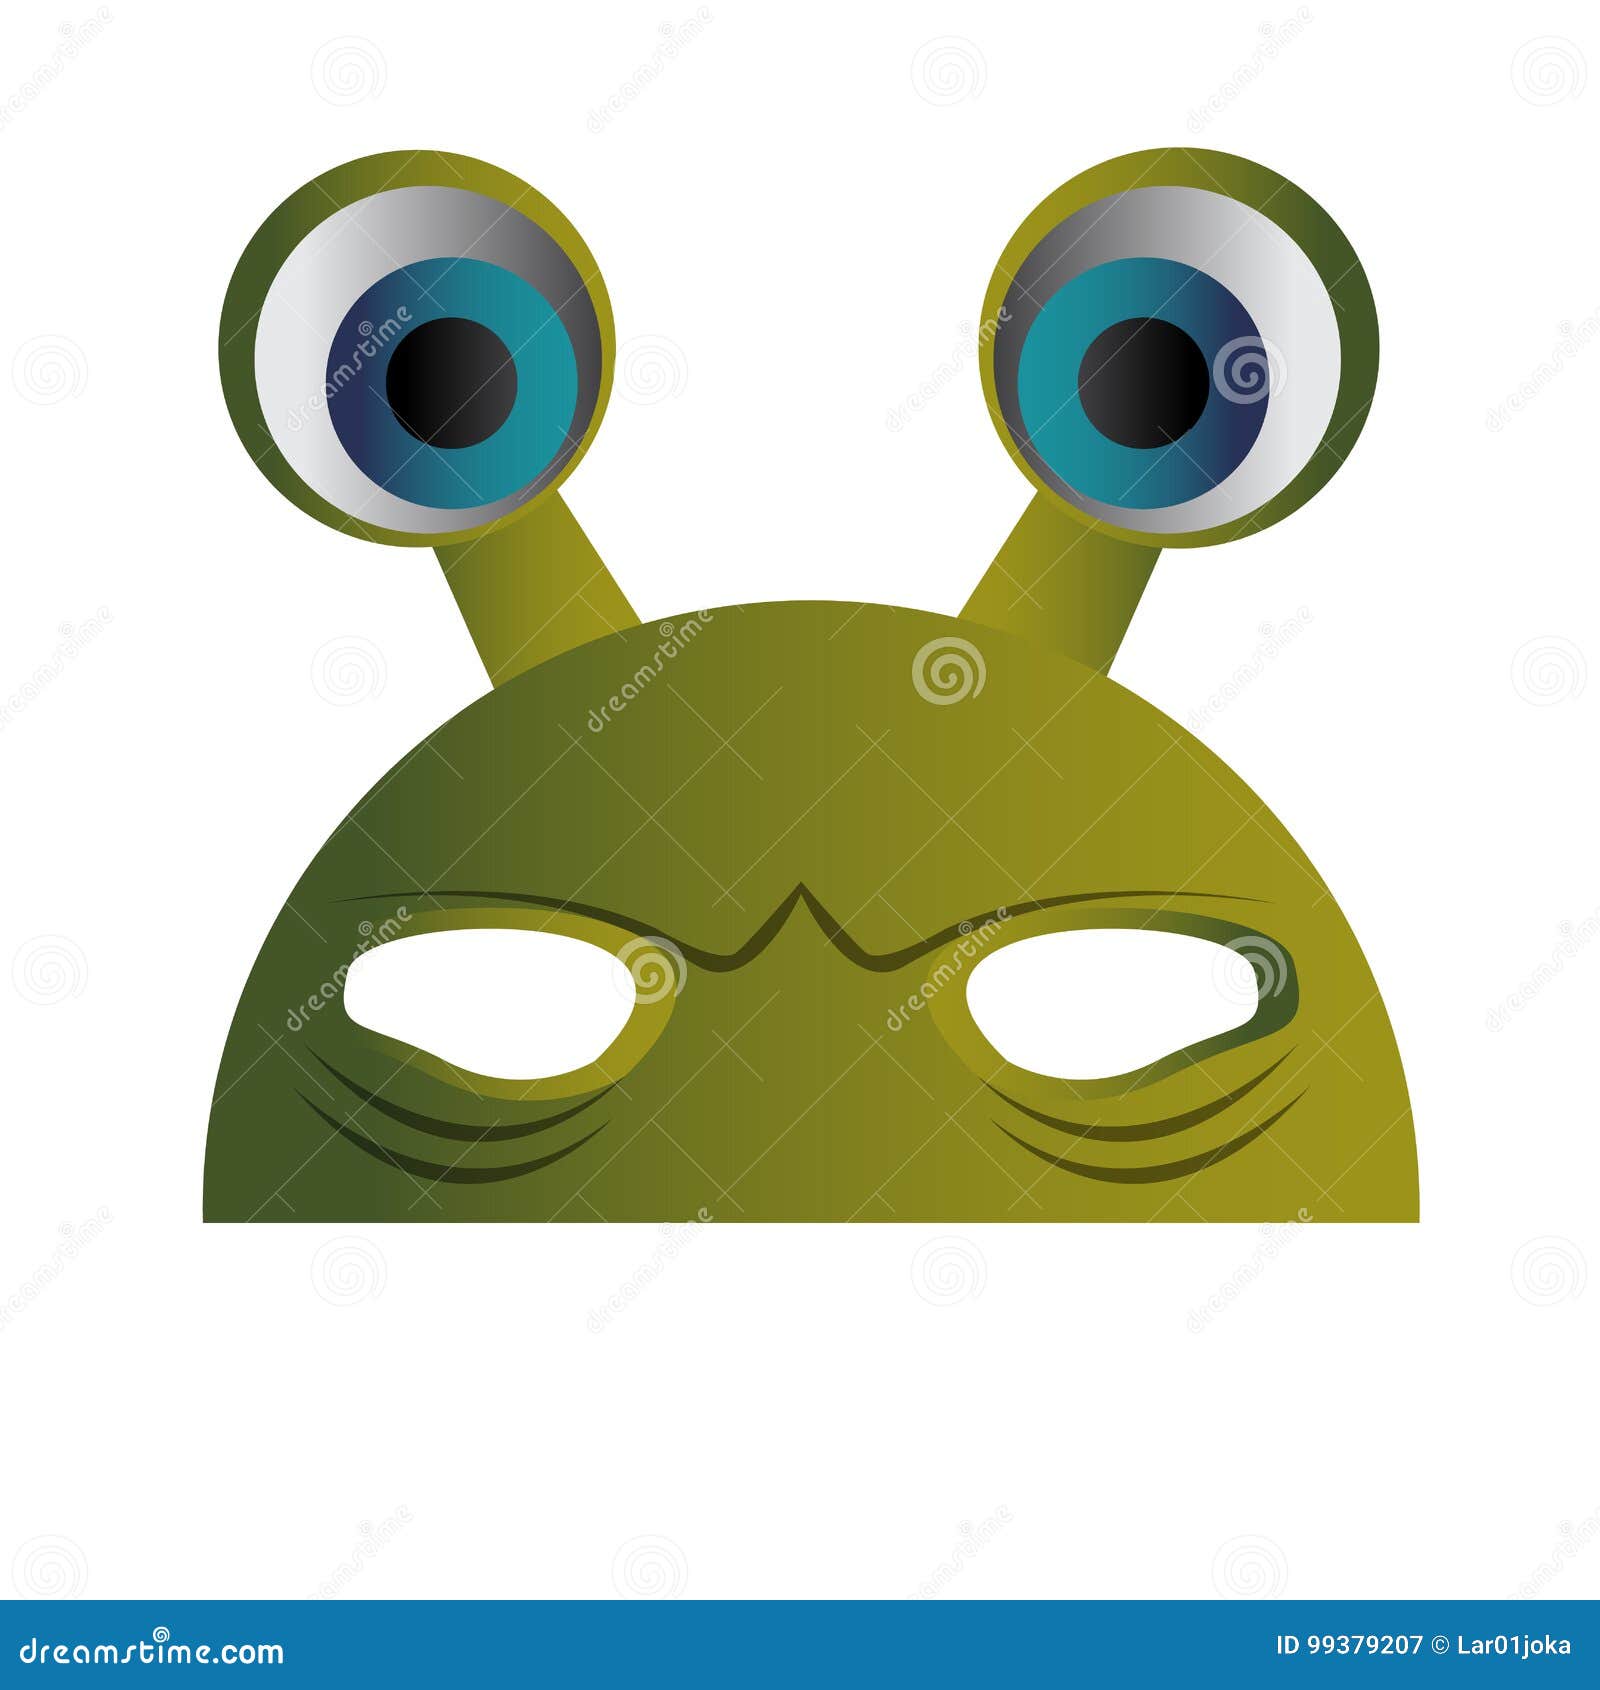 Halloween alien mask stock vector. Illustration of object - 99379207